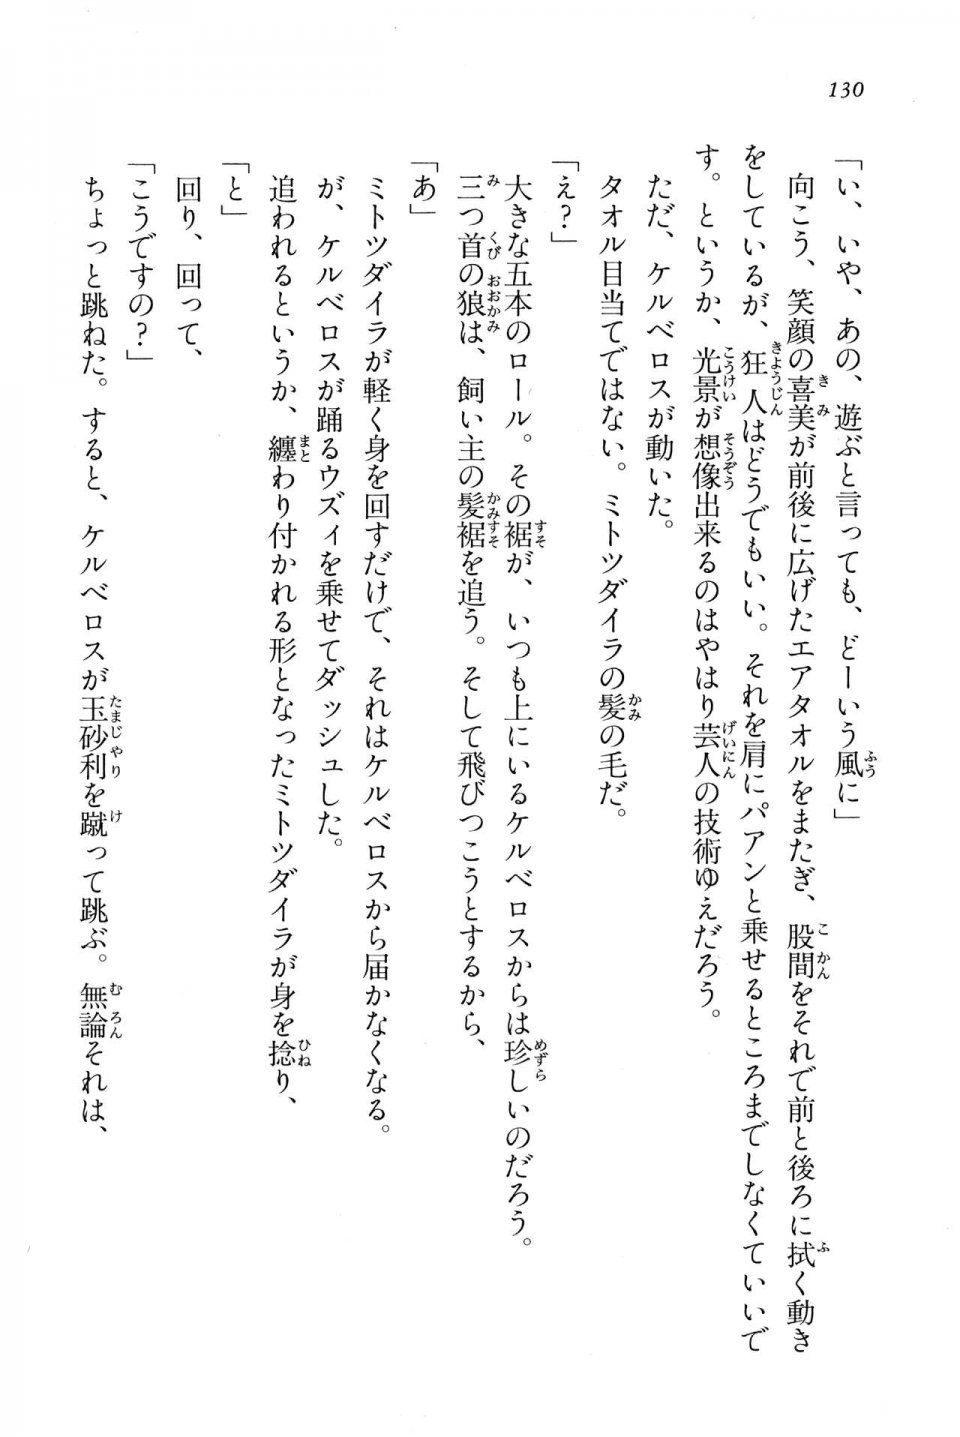 Kyoukai Senjou no Horizon BD Special Mininovel Vol 6(3B) - Photo #134